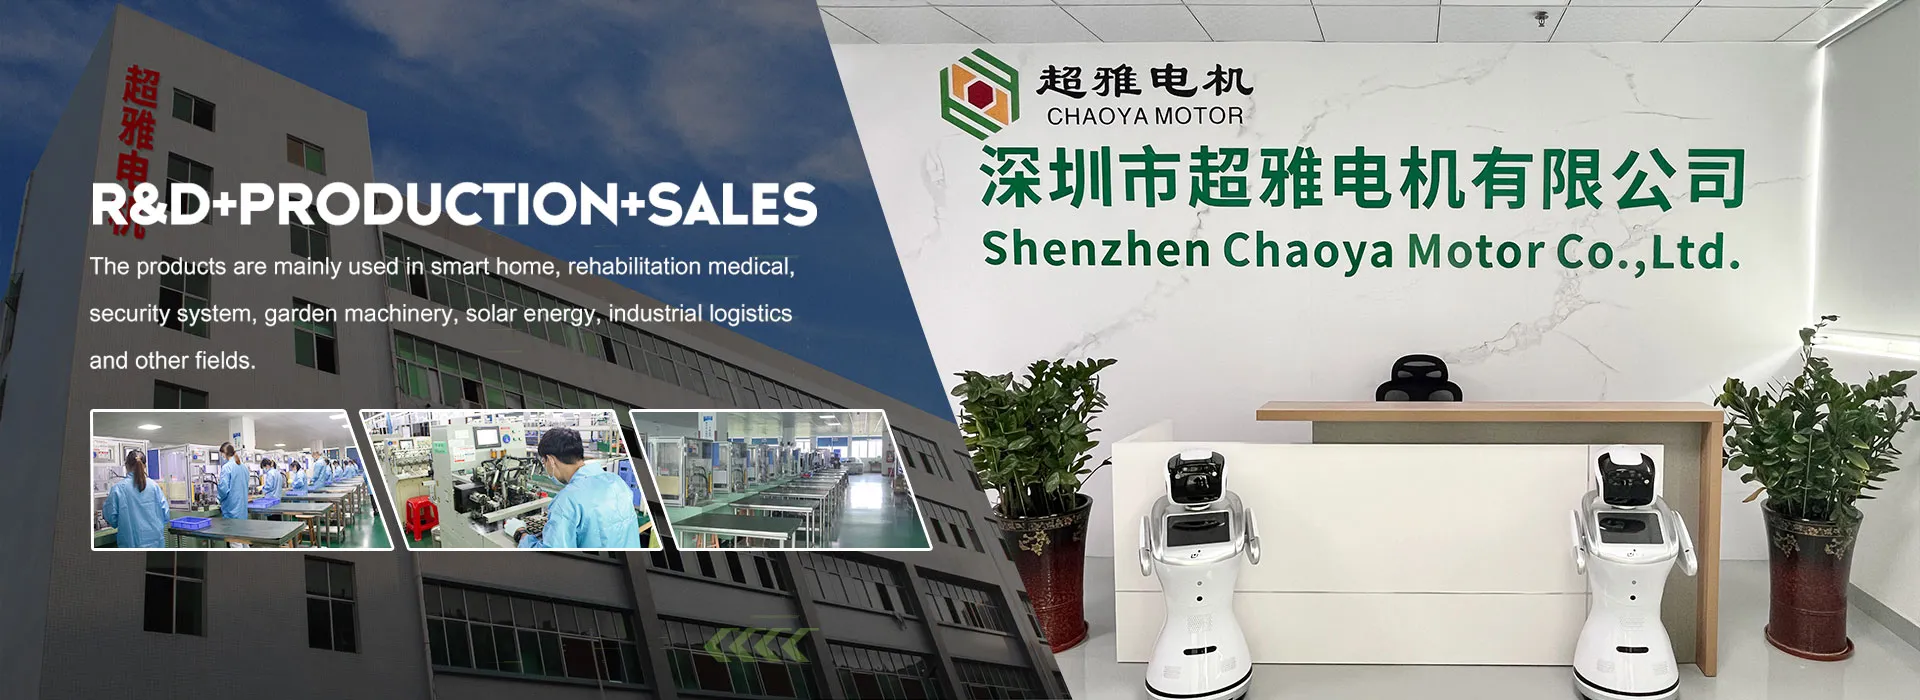 Shenzhen Chaoya Motor Co, Ltd